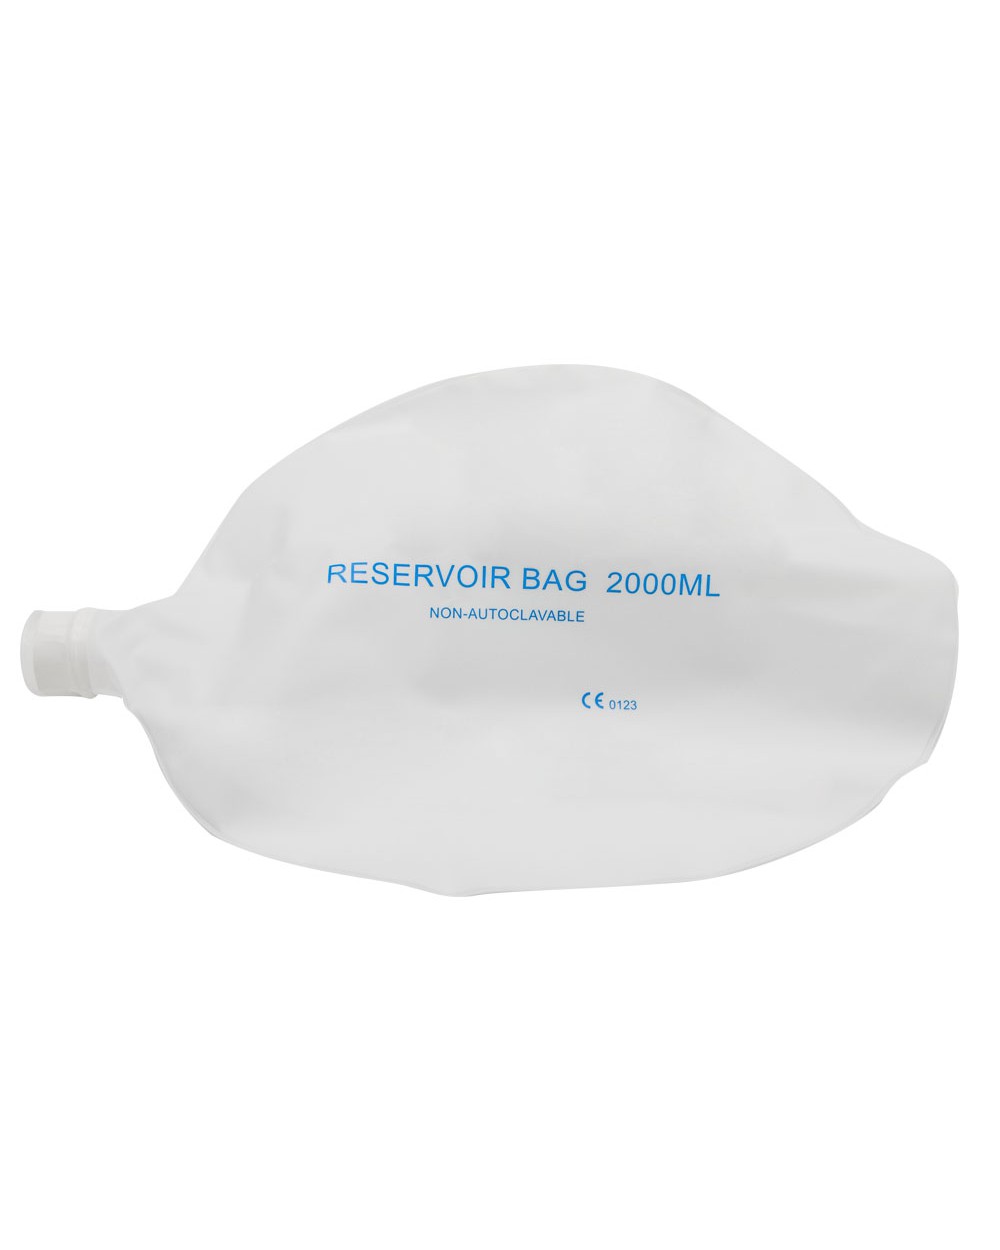 Inspiron Non-Rebreather Oxygen Mask Reservoir Bag 84 Tube New 10 Case | eBay